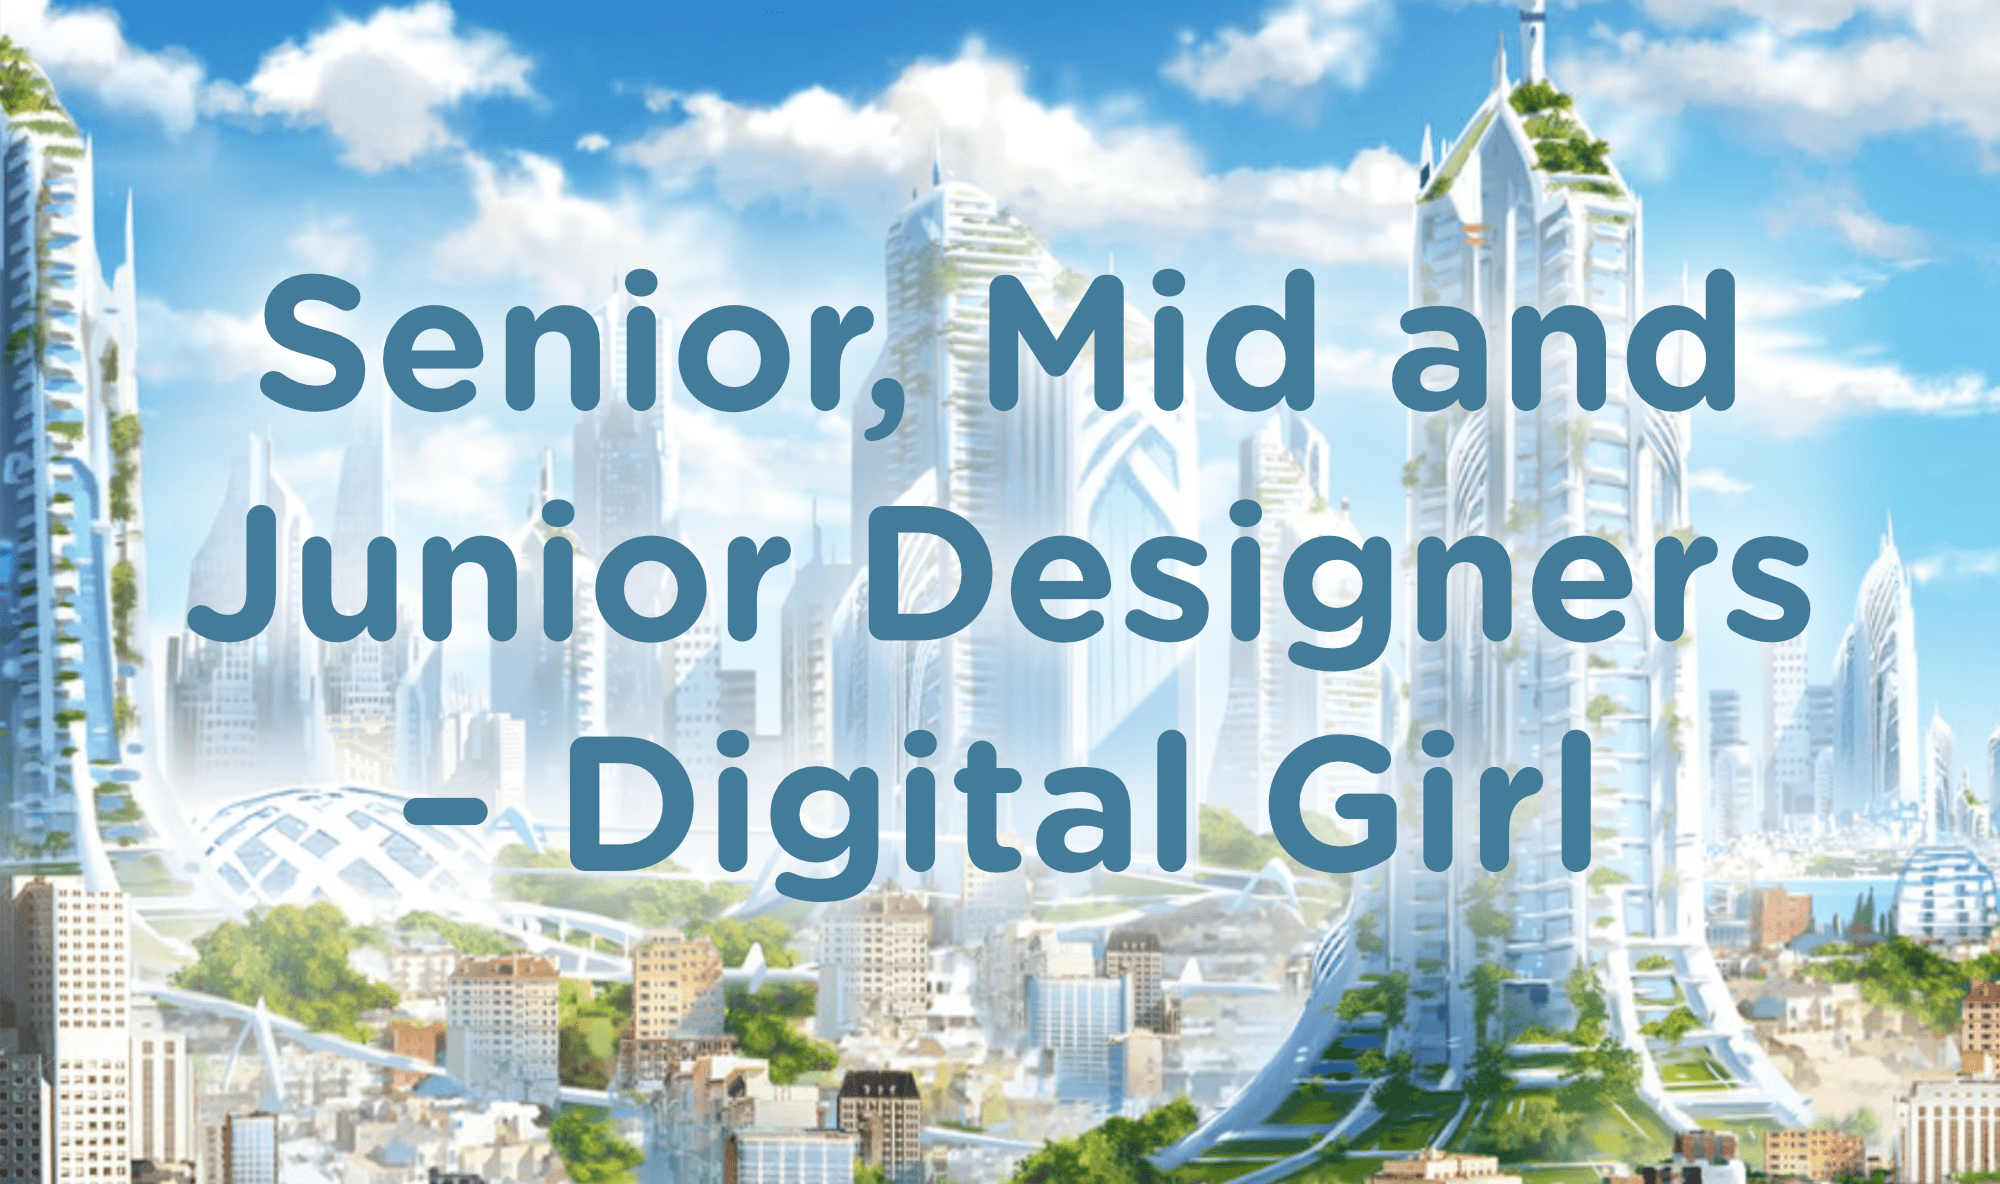 Senior, Mid and Junior Designers – Digital Girl